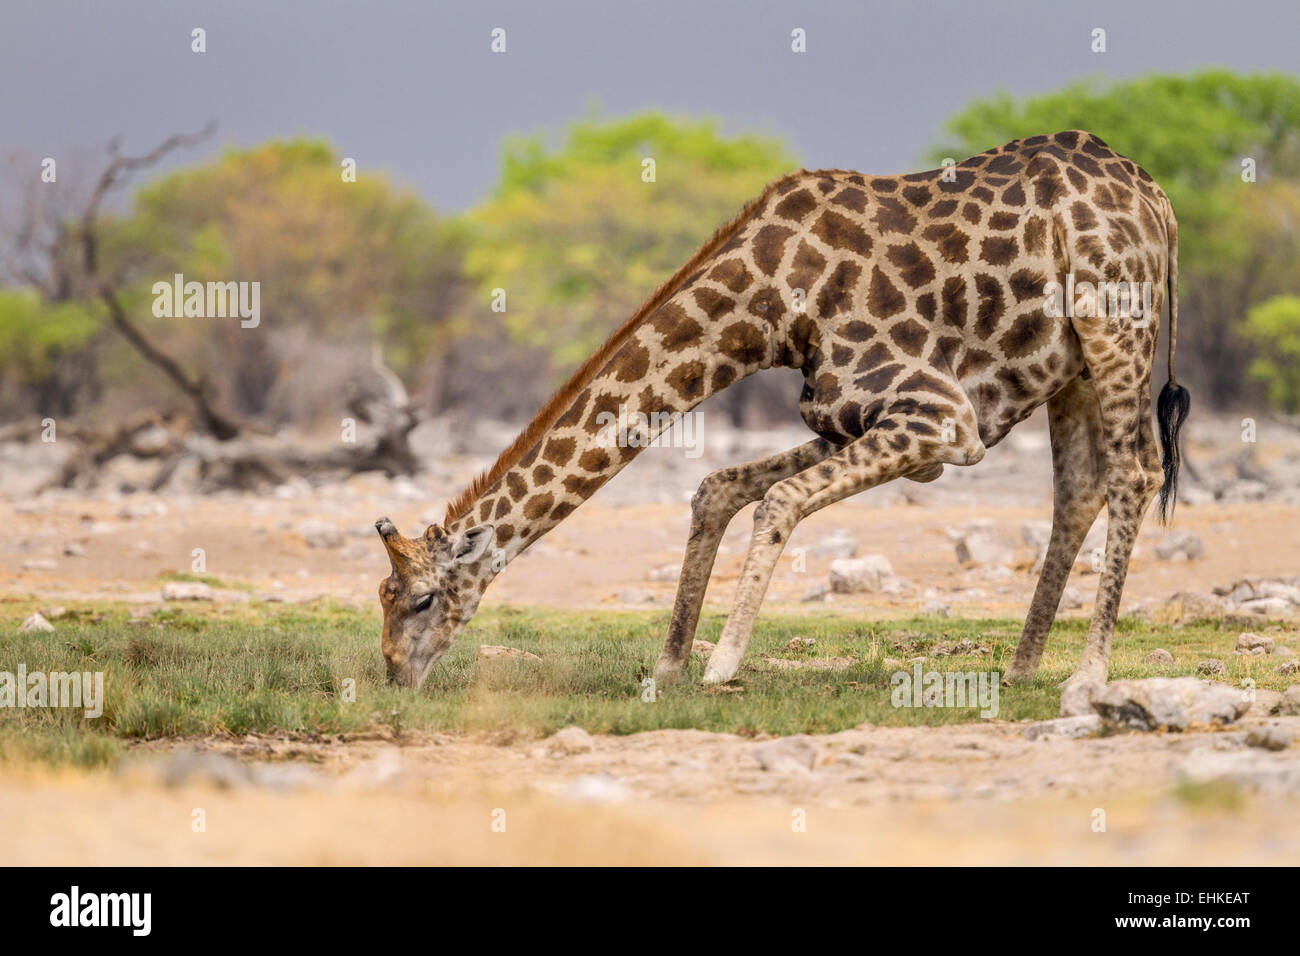 A giraffe drinking water in Etosha National Park, Namibia. Stock Photo